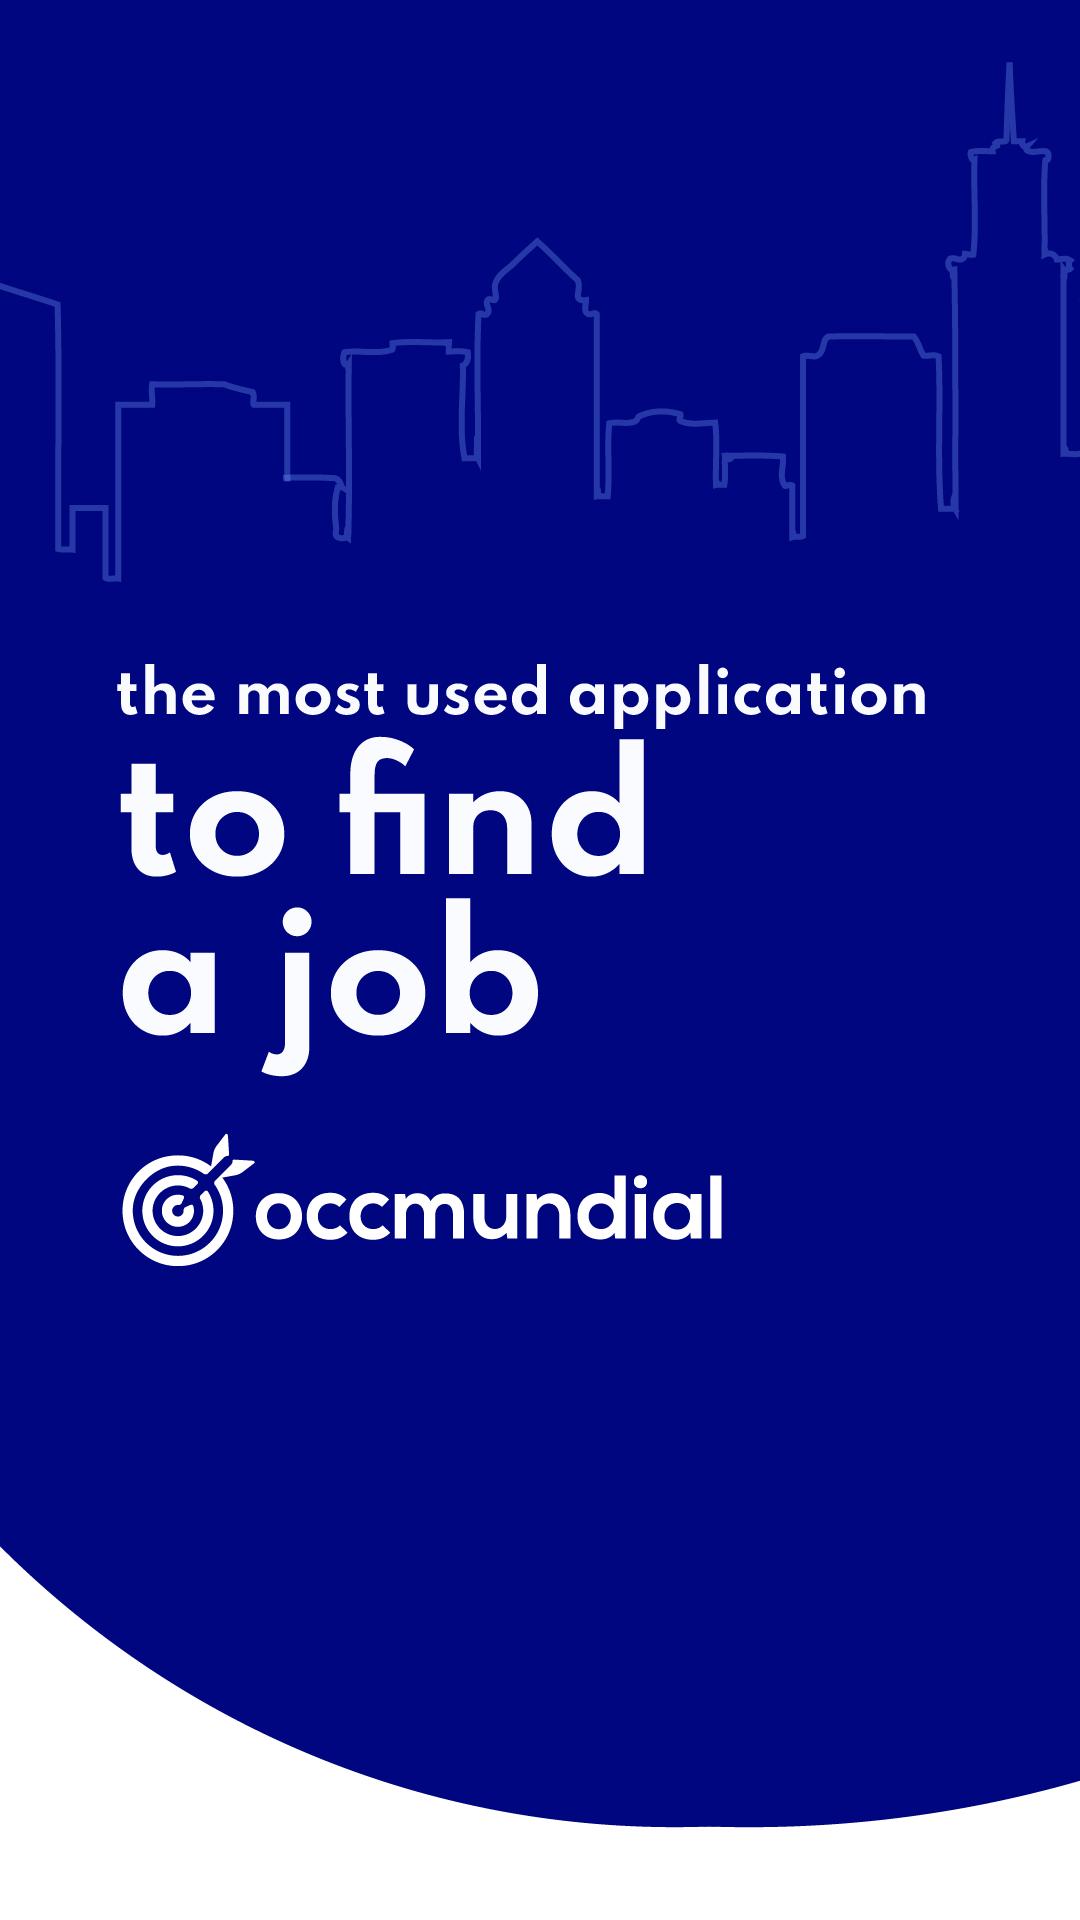 Jobs Search and Employment - OCCMundial 5.2.0 Screenshot 1